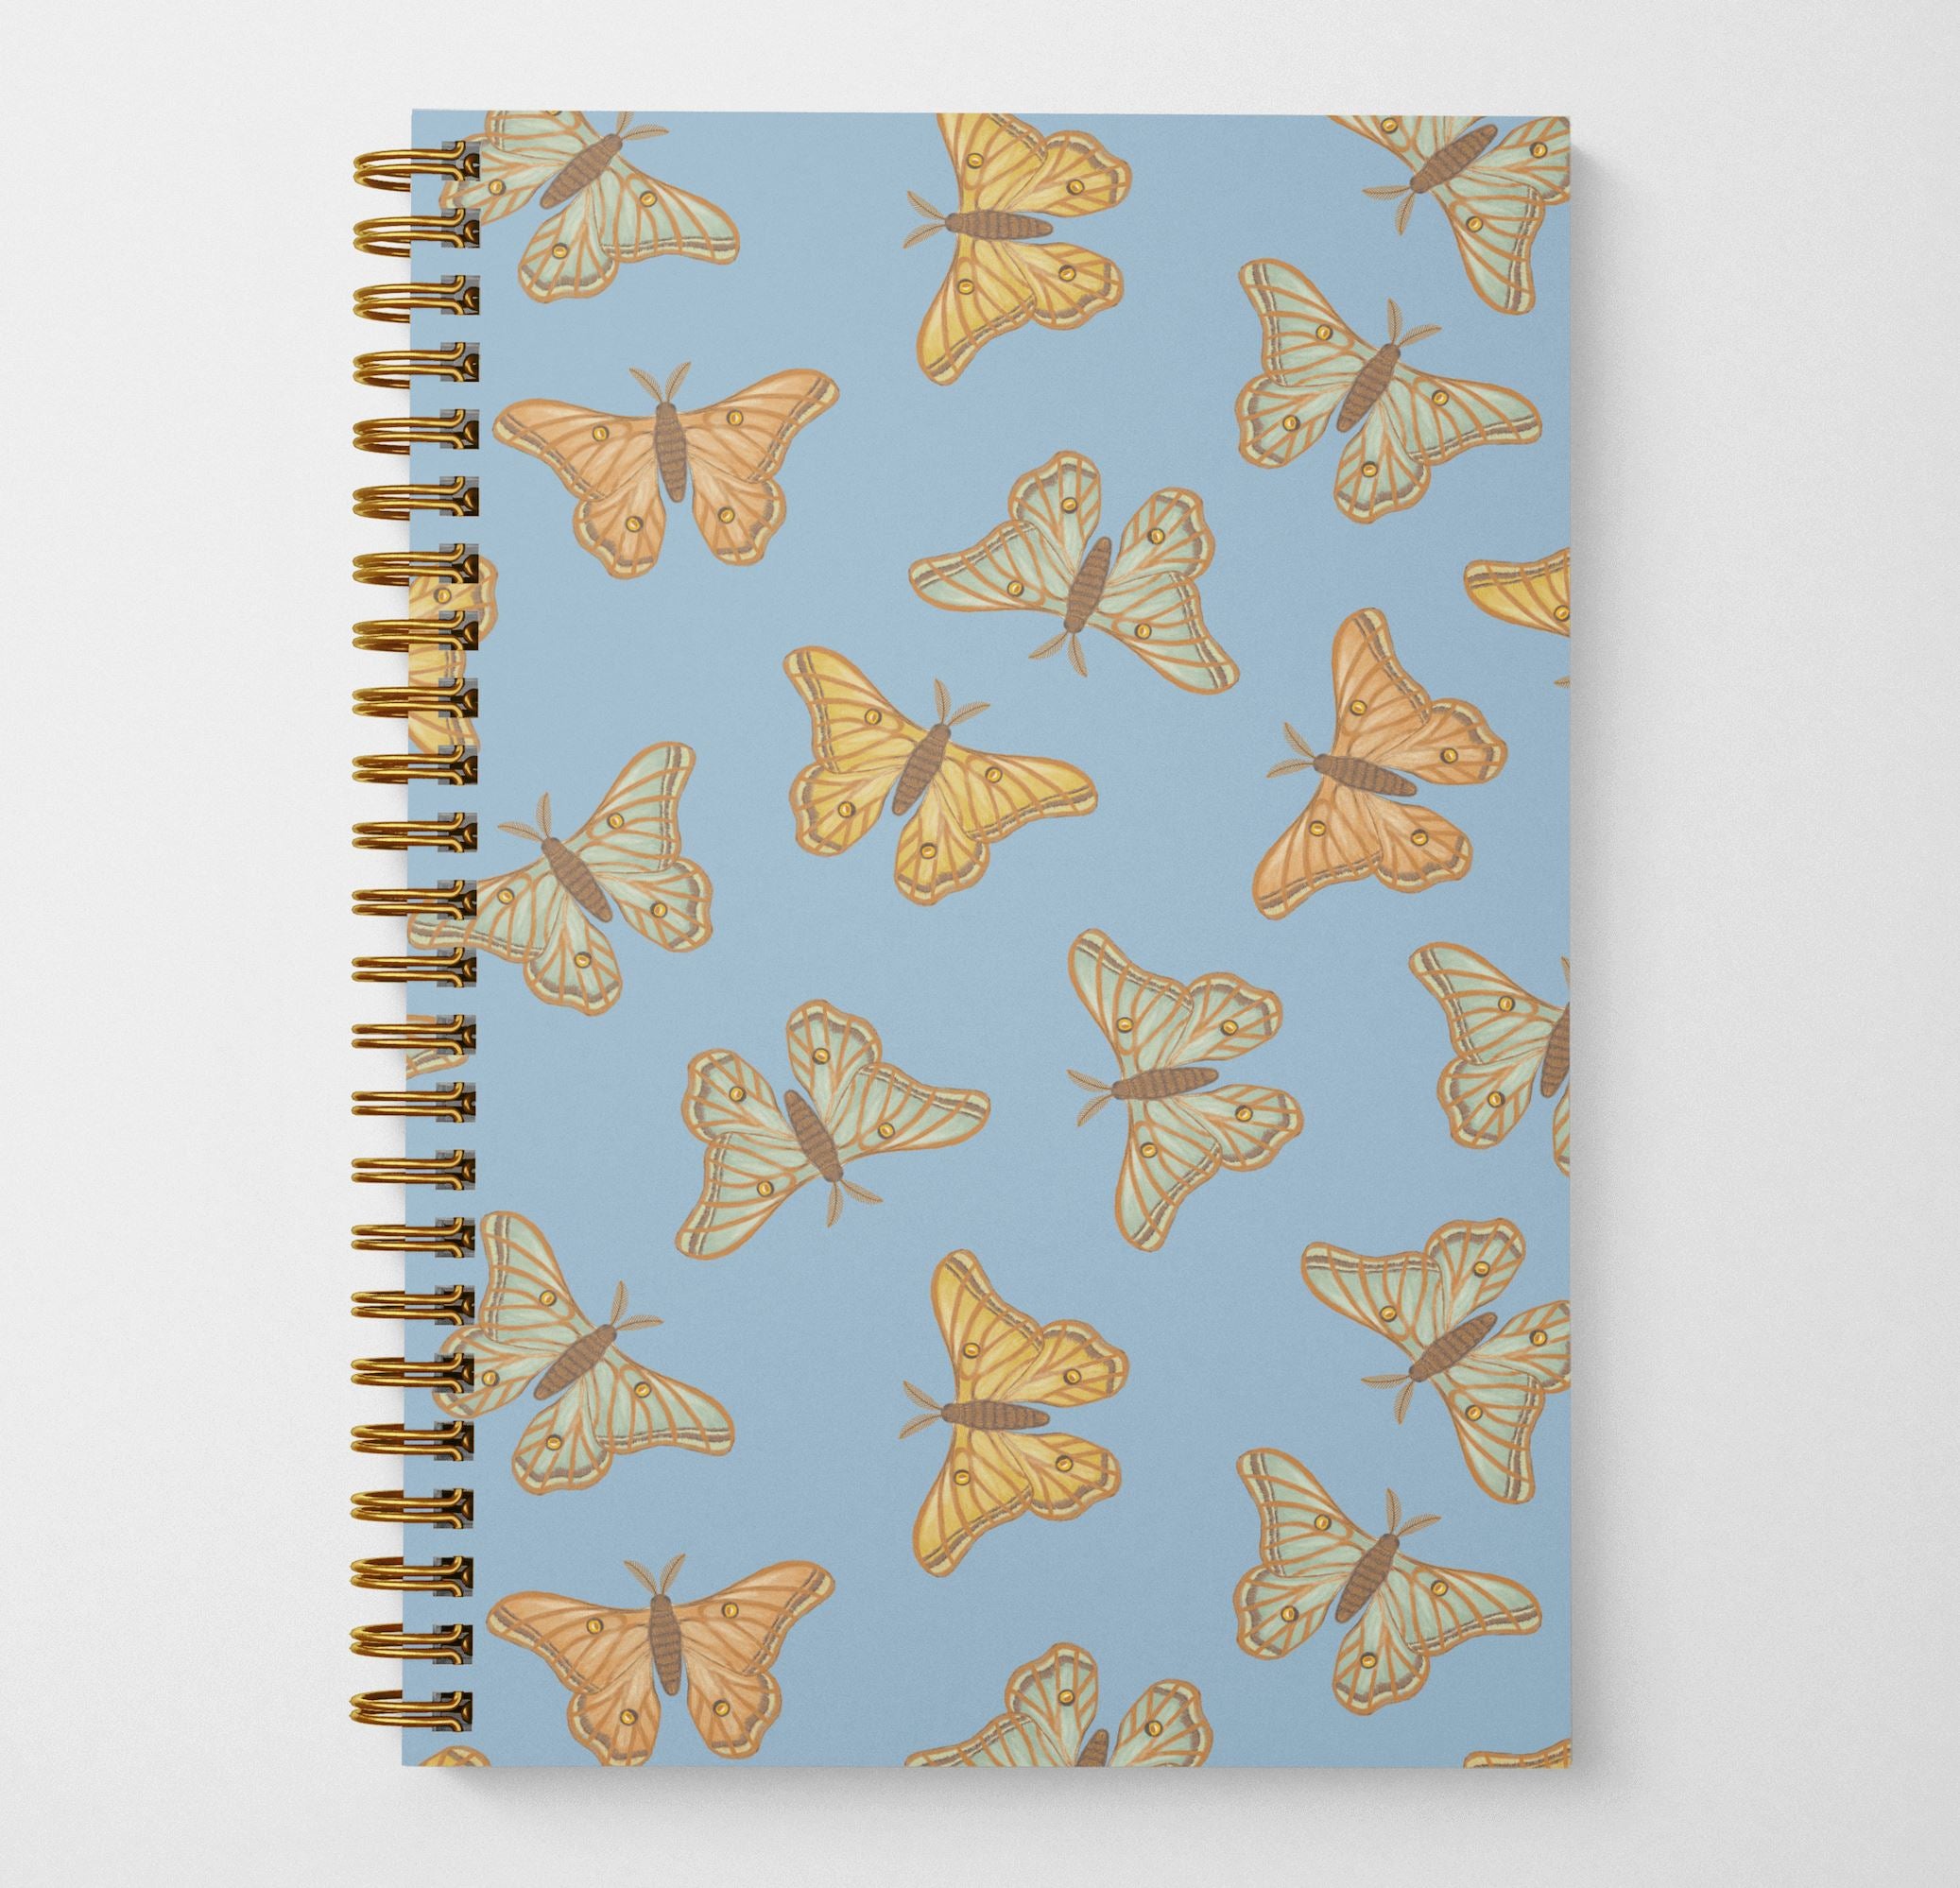 Spanish Moon Moths Eco-Friendly Spiral Bound Notebook Notebooks Lucid Moon Studio 